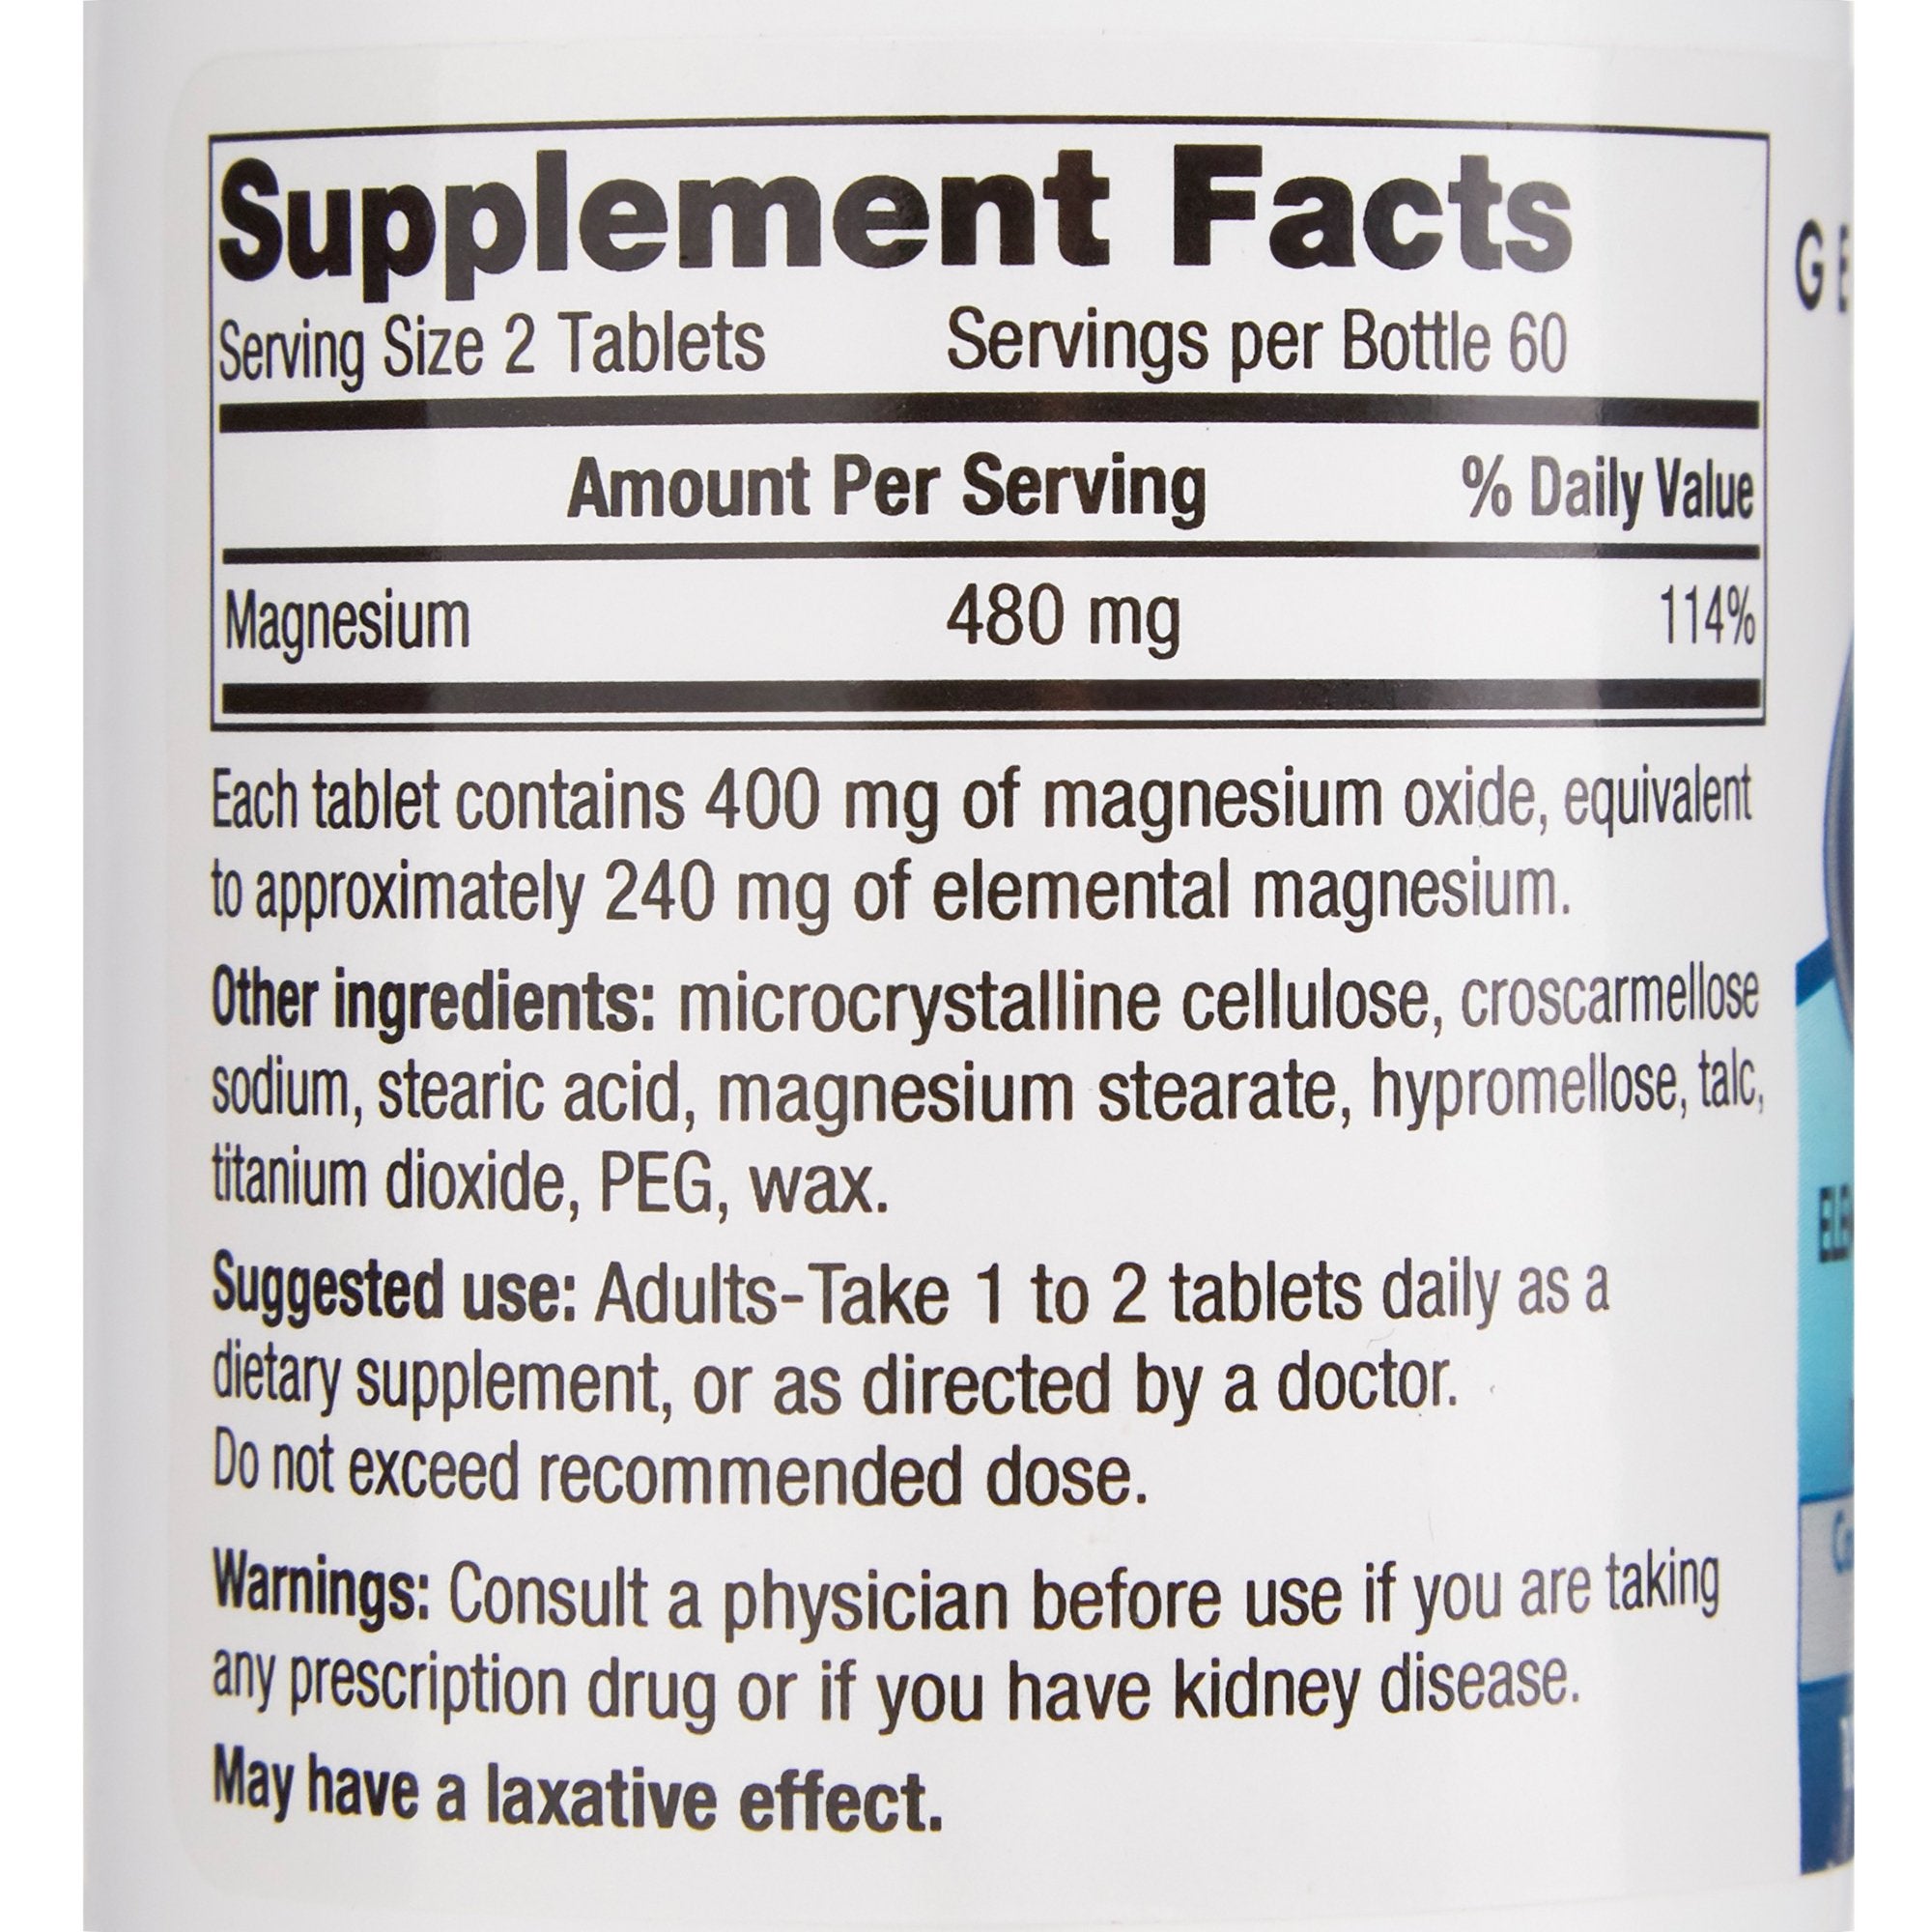 Mineral Supplement Geri-Care Magnesium Oxide 400 mg Strength Tablet 120 per Bottle